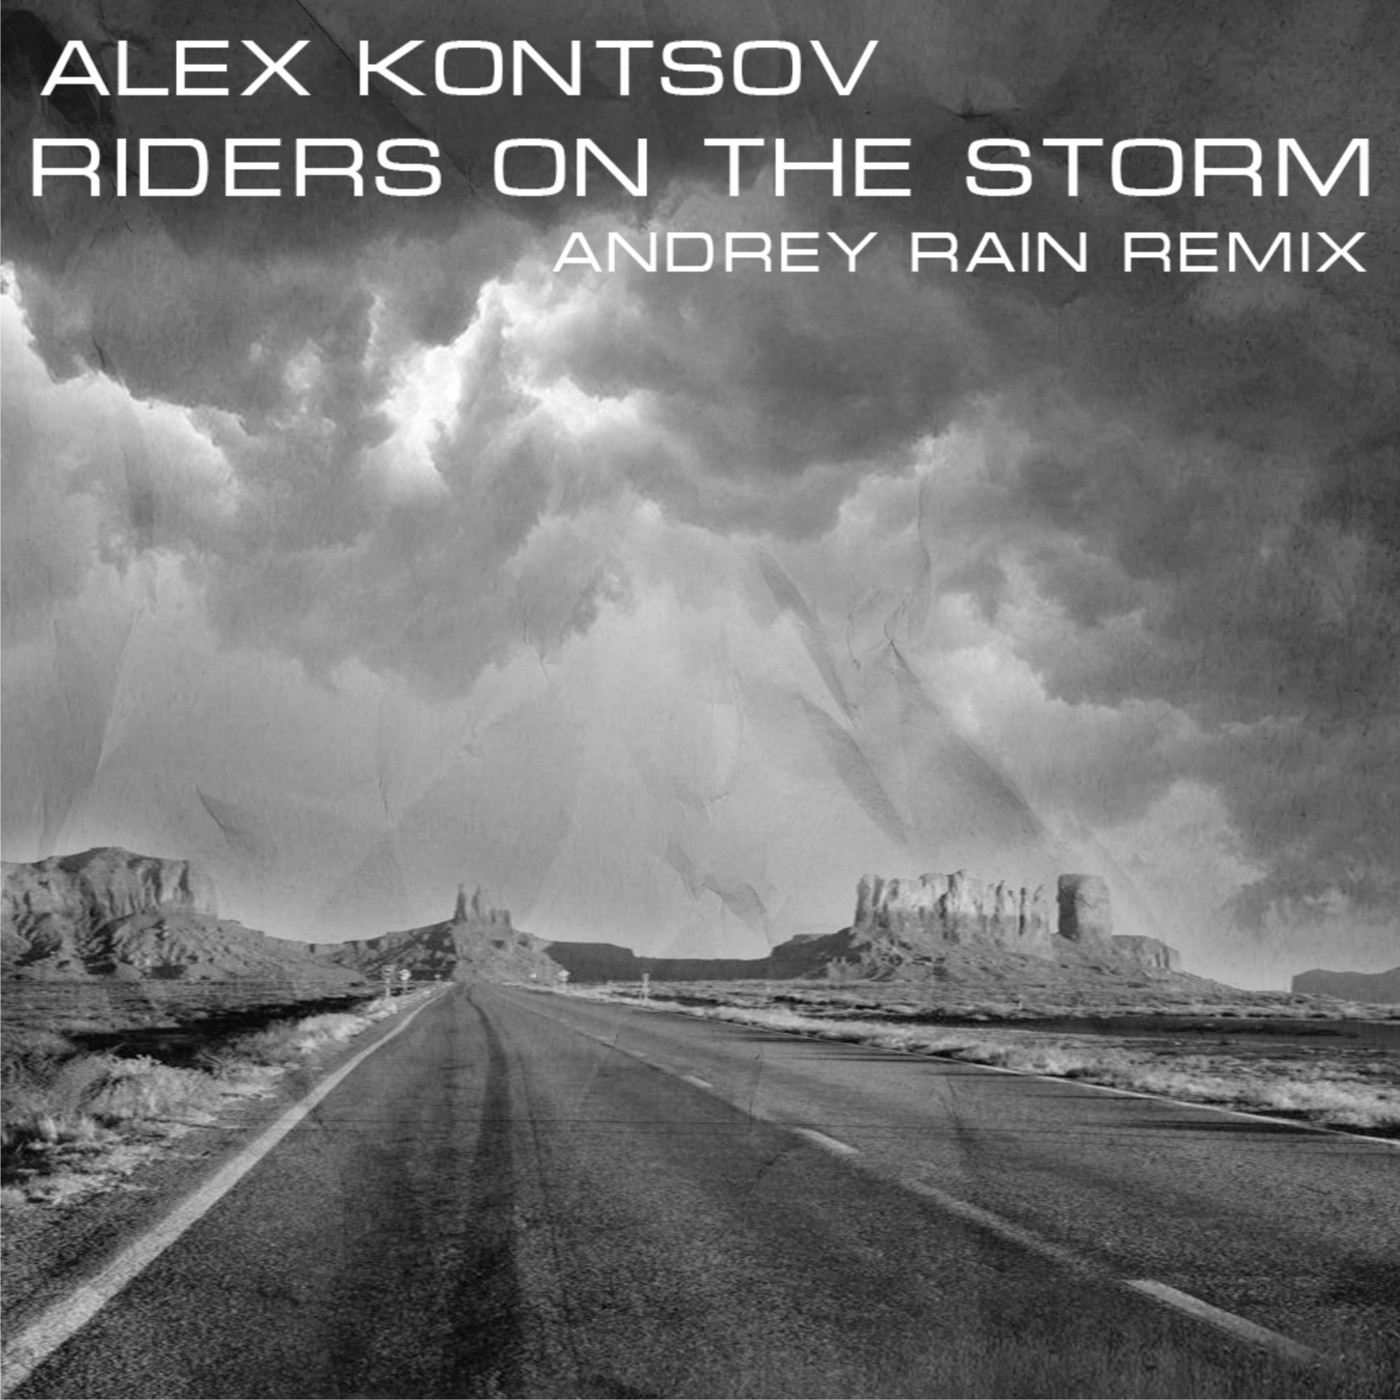 Riders on the Storm. The Rain Remix. Alex kontsov Riders on the Storm FUZZDEAD Remix. Alex kontsov - Red Dust (feat. Isentie) альбом. Музыка холодный дождь